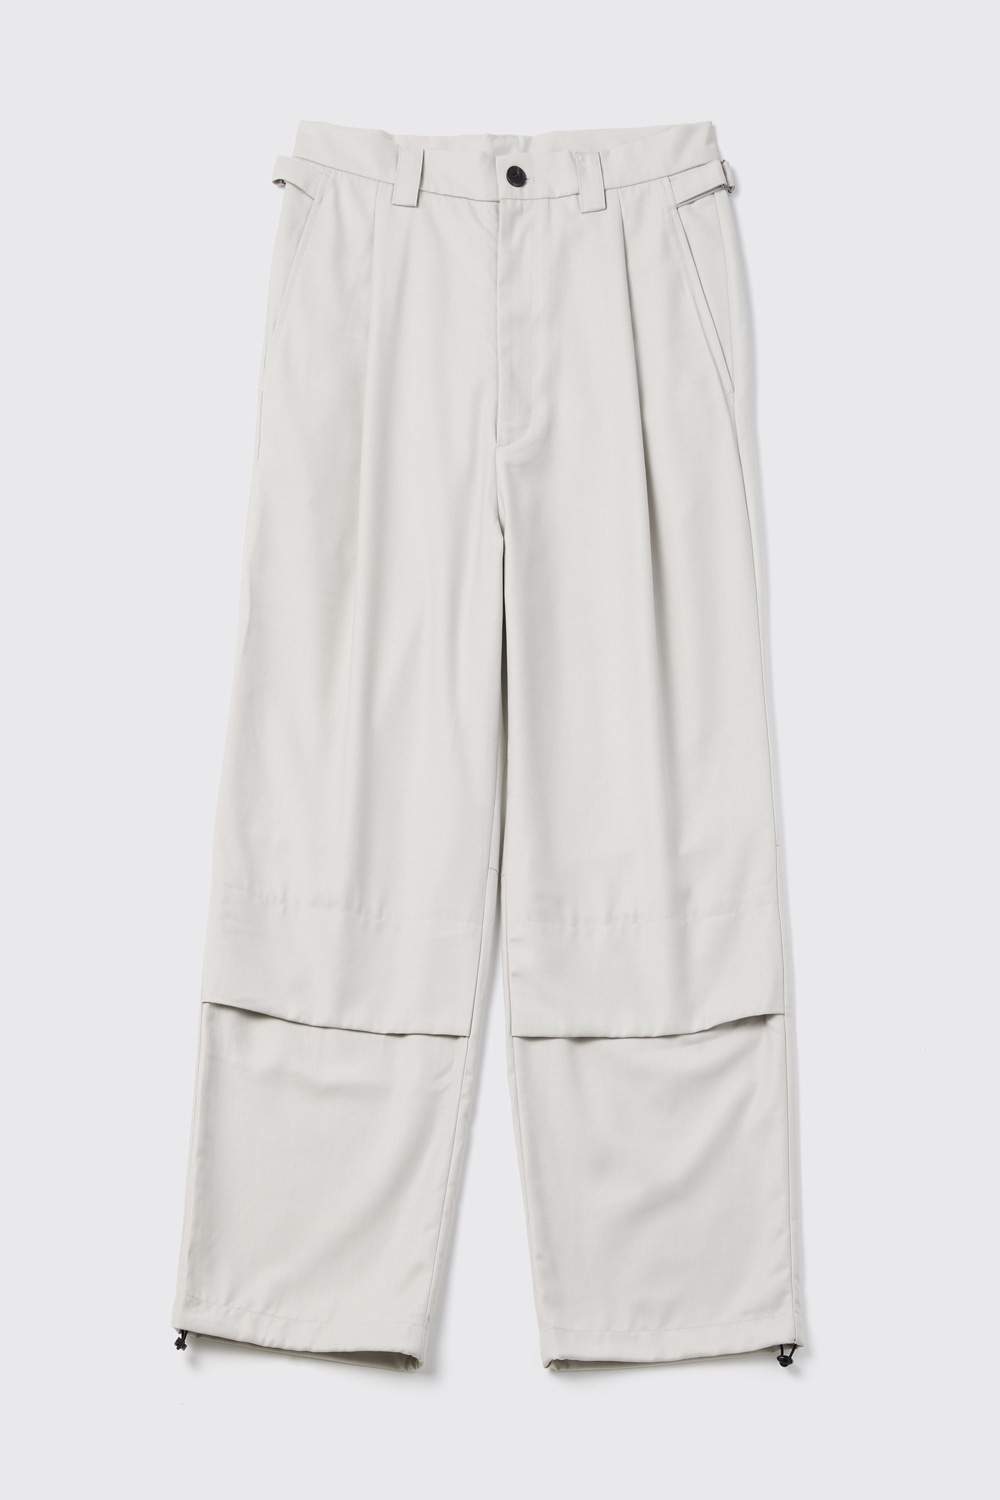 Layer Pants V2 Light Grey